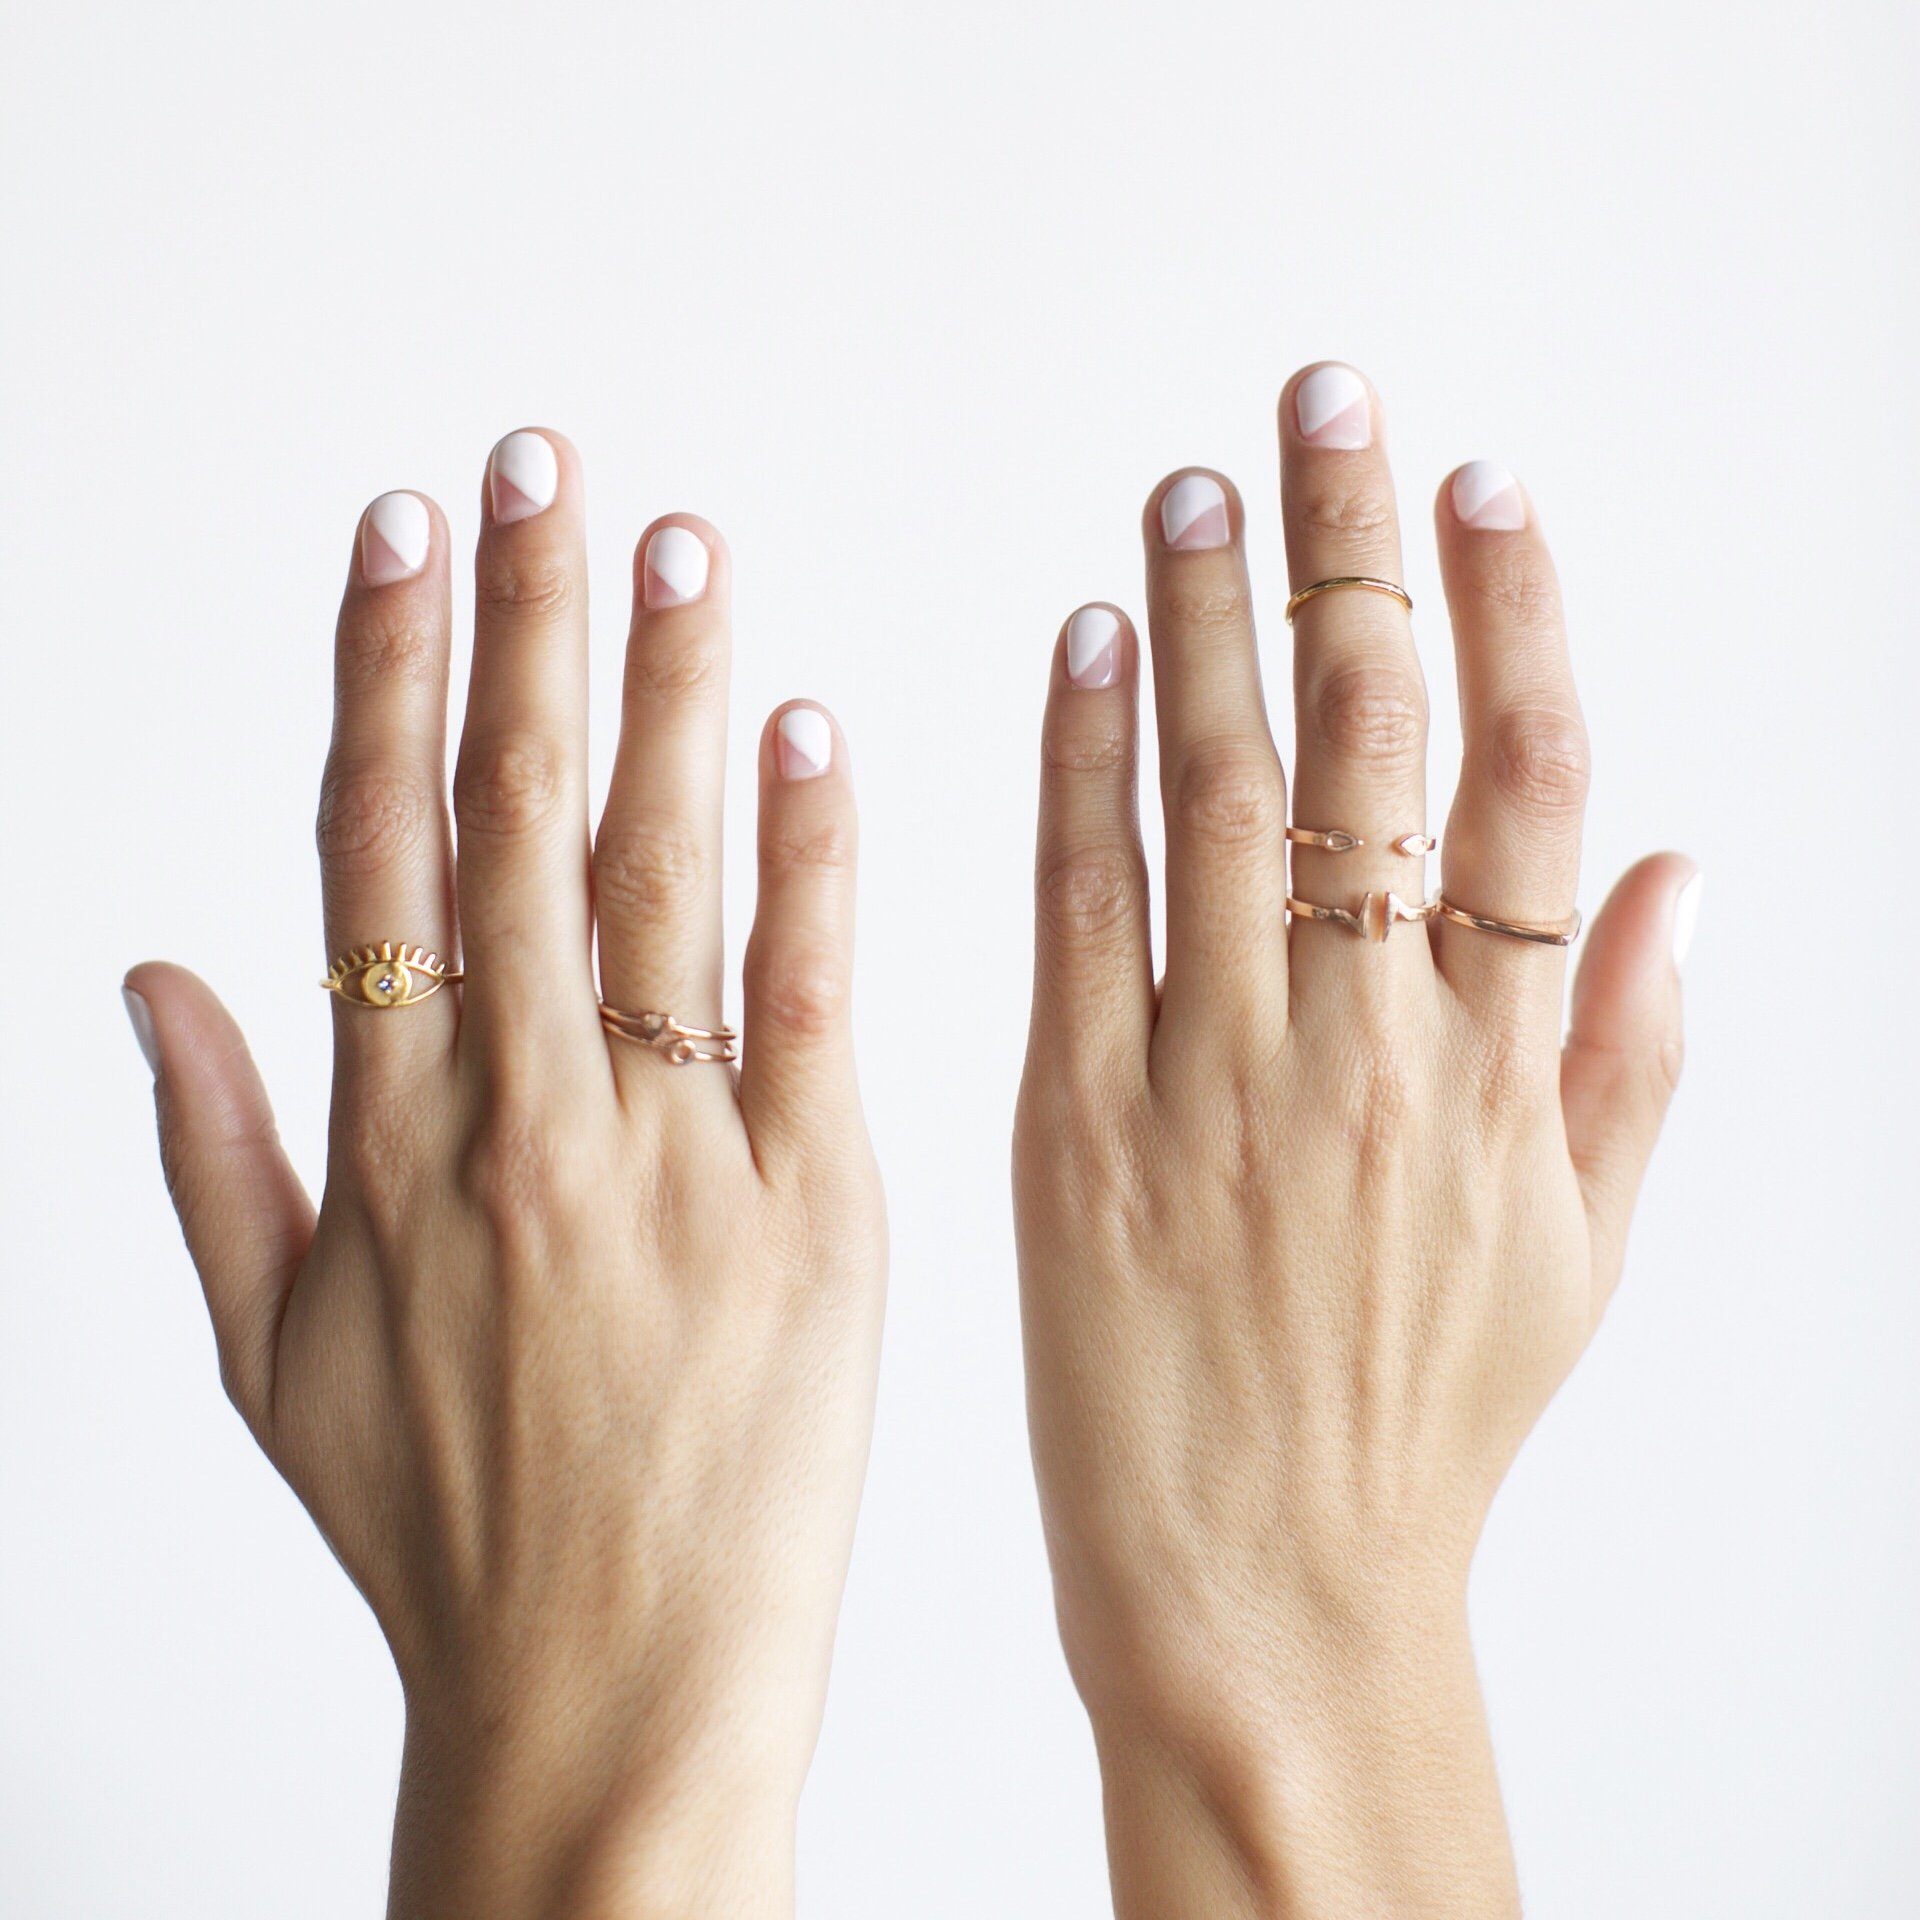 Katie Dean hand Model wearing rings on each hand.